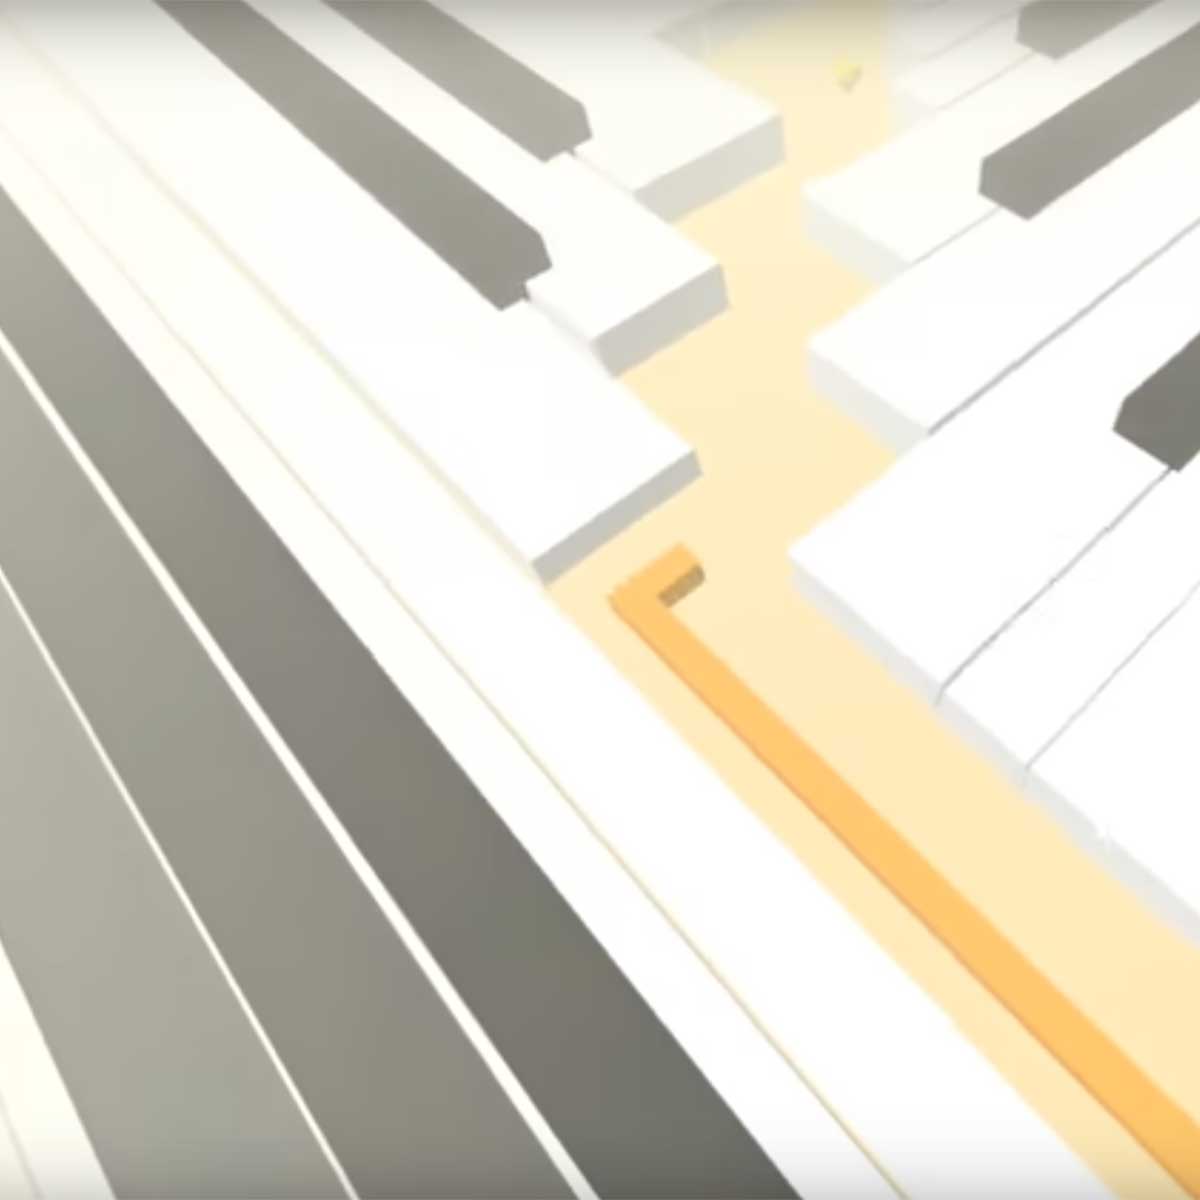 Piano Songs From Games Minecraft Undertale Pokemon Virtual Piano - roblox piano sheets pokemon